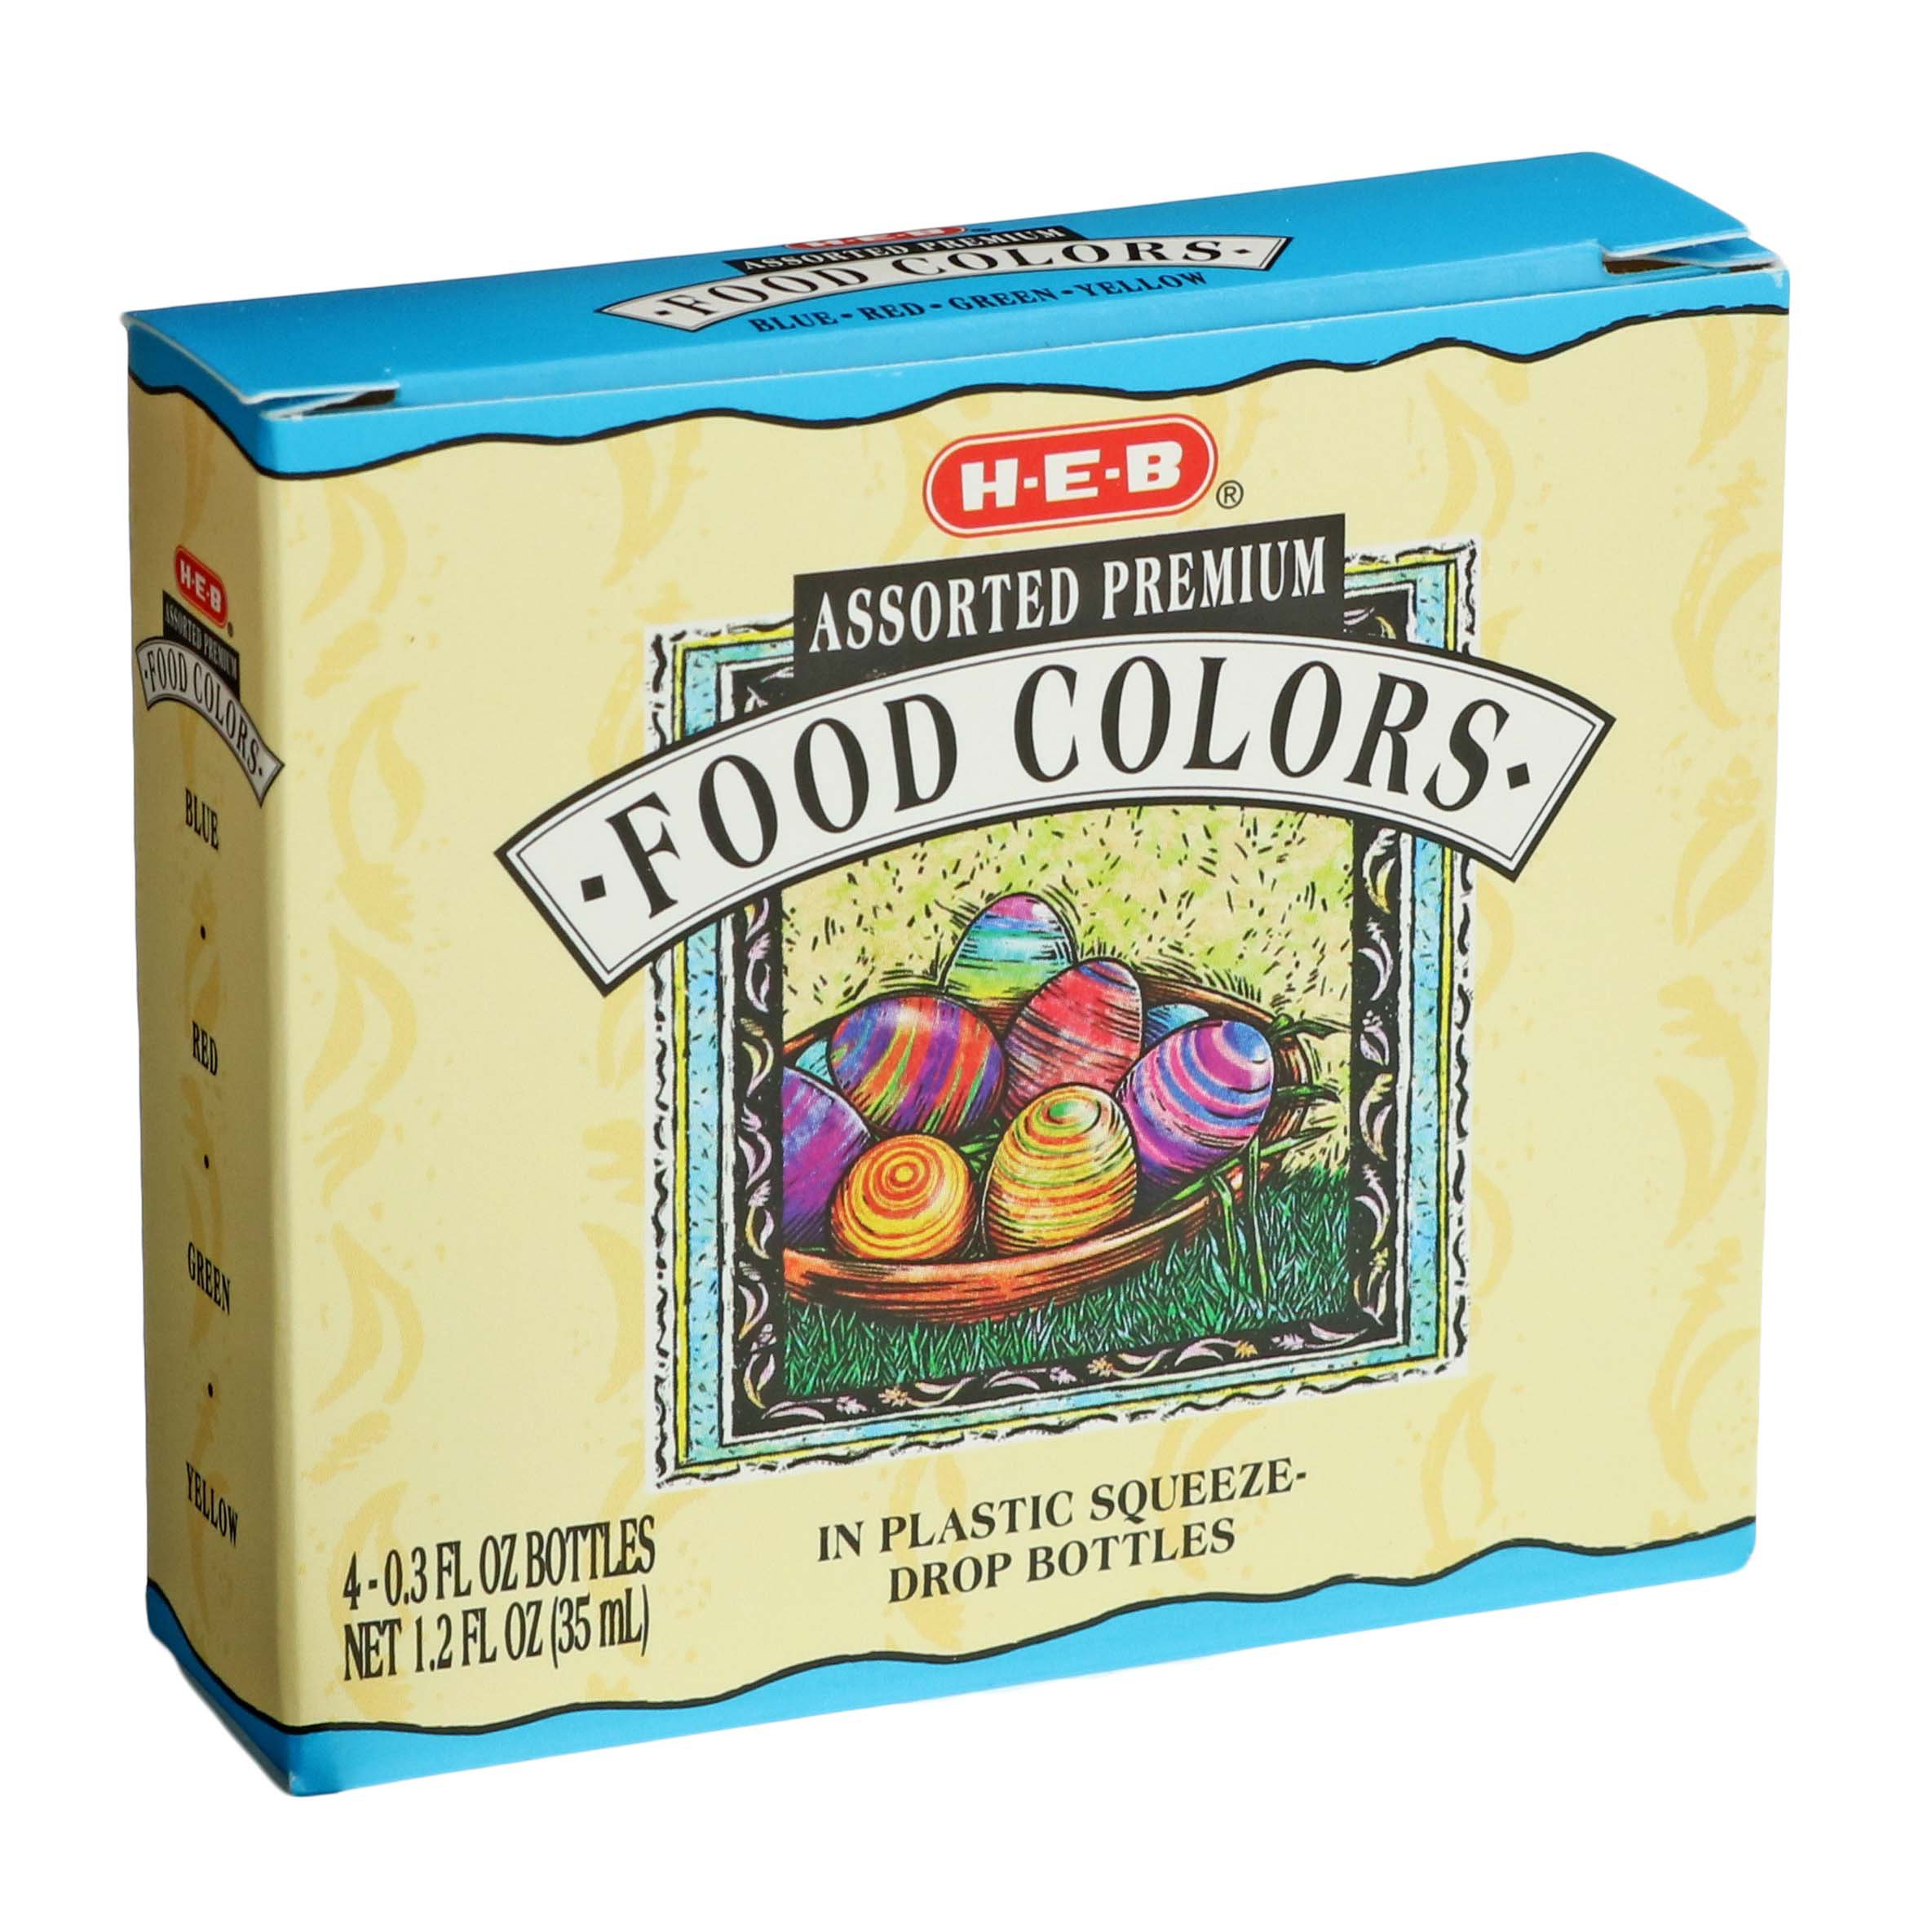 H-E-B Assorted Premium Food Colors